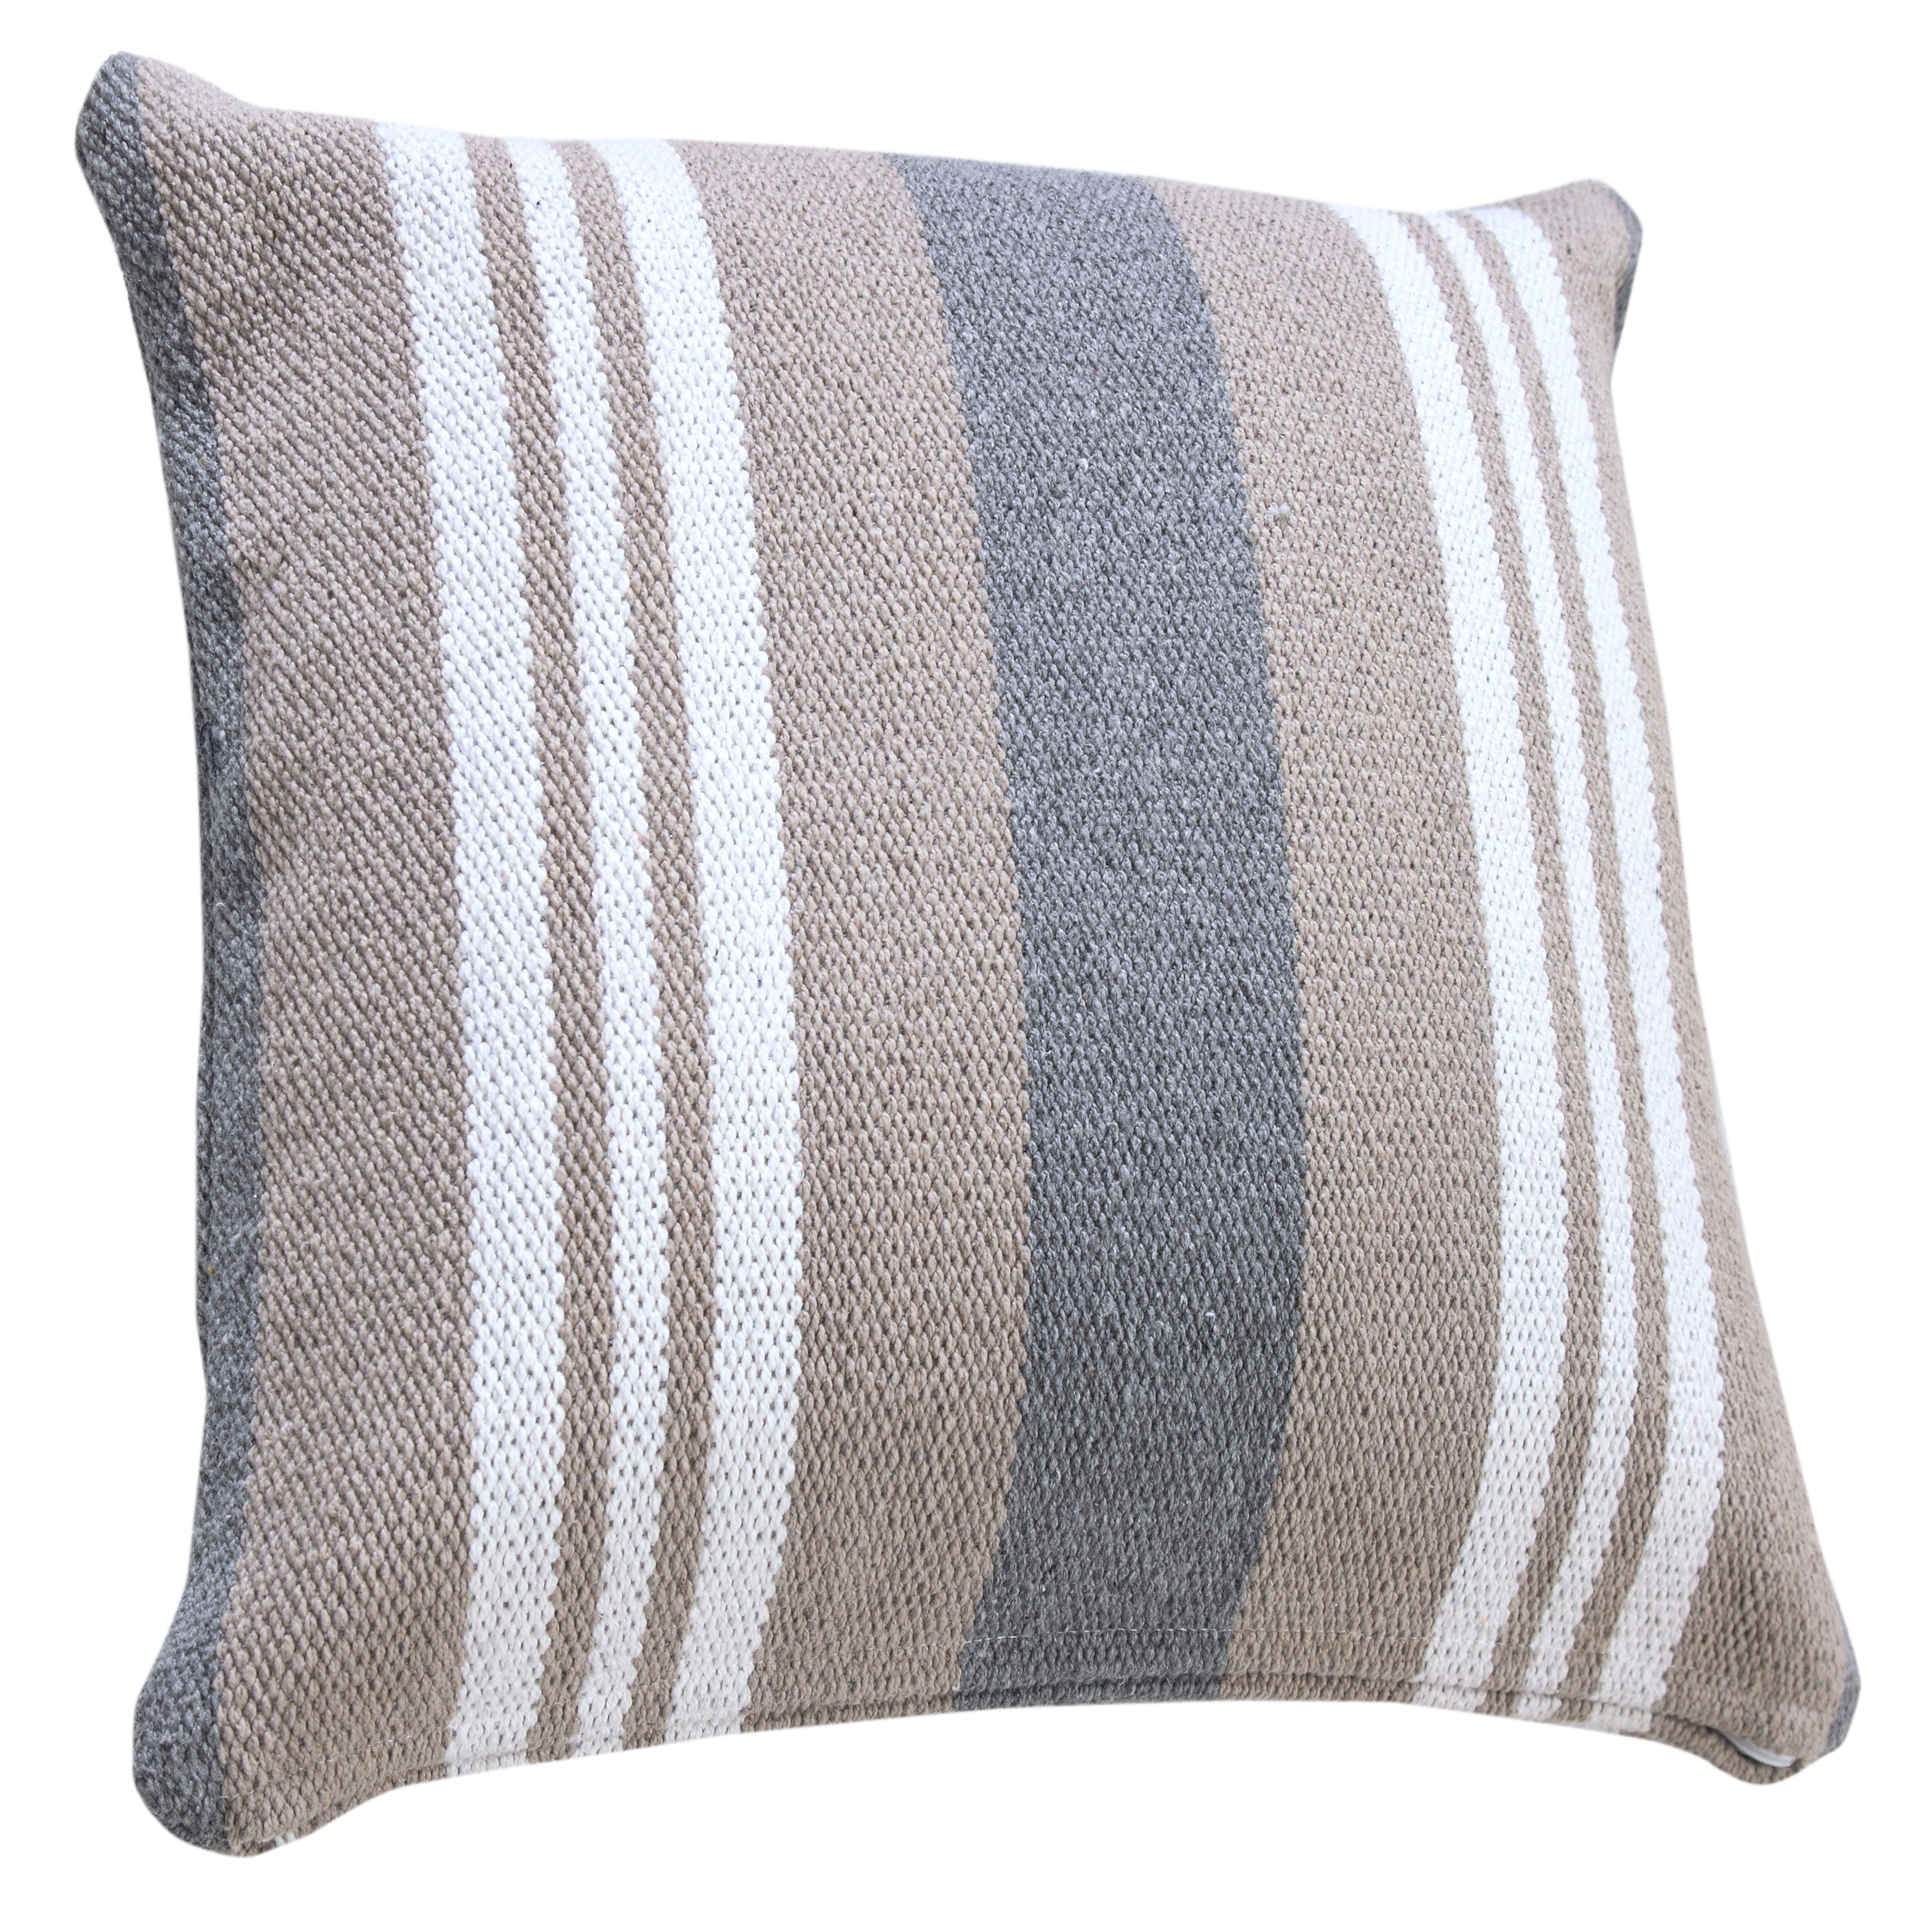 LR Home Classic Coastal Club Double Striped Throw Pillow, Blue/Gray/White